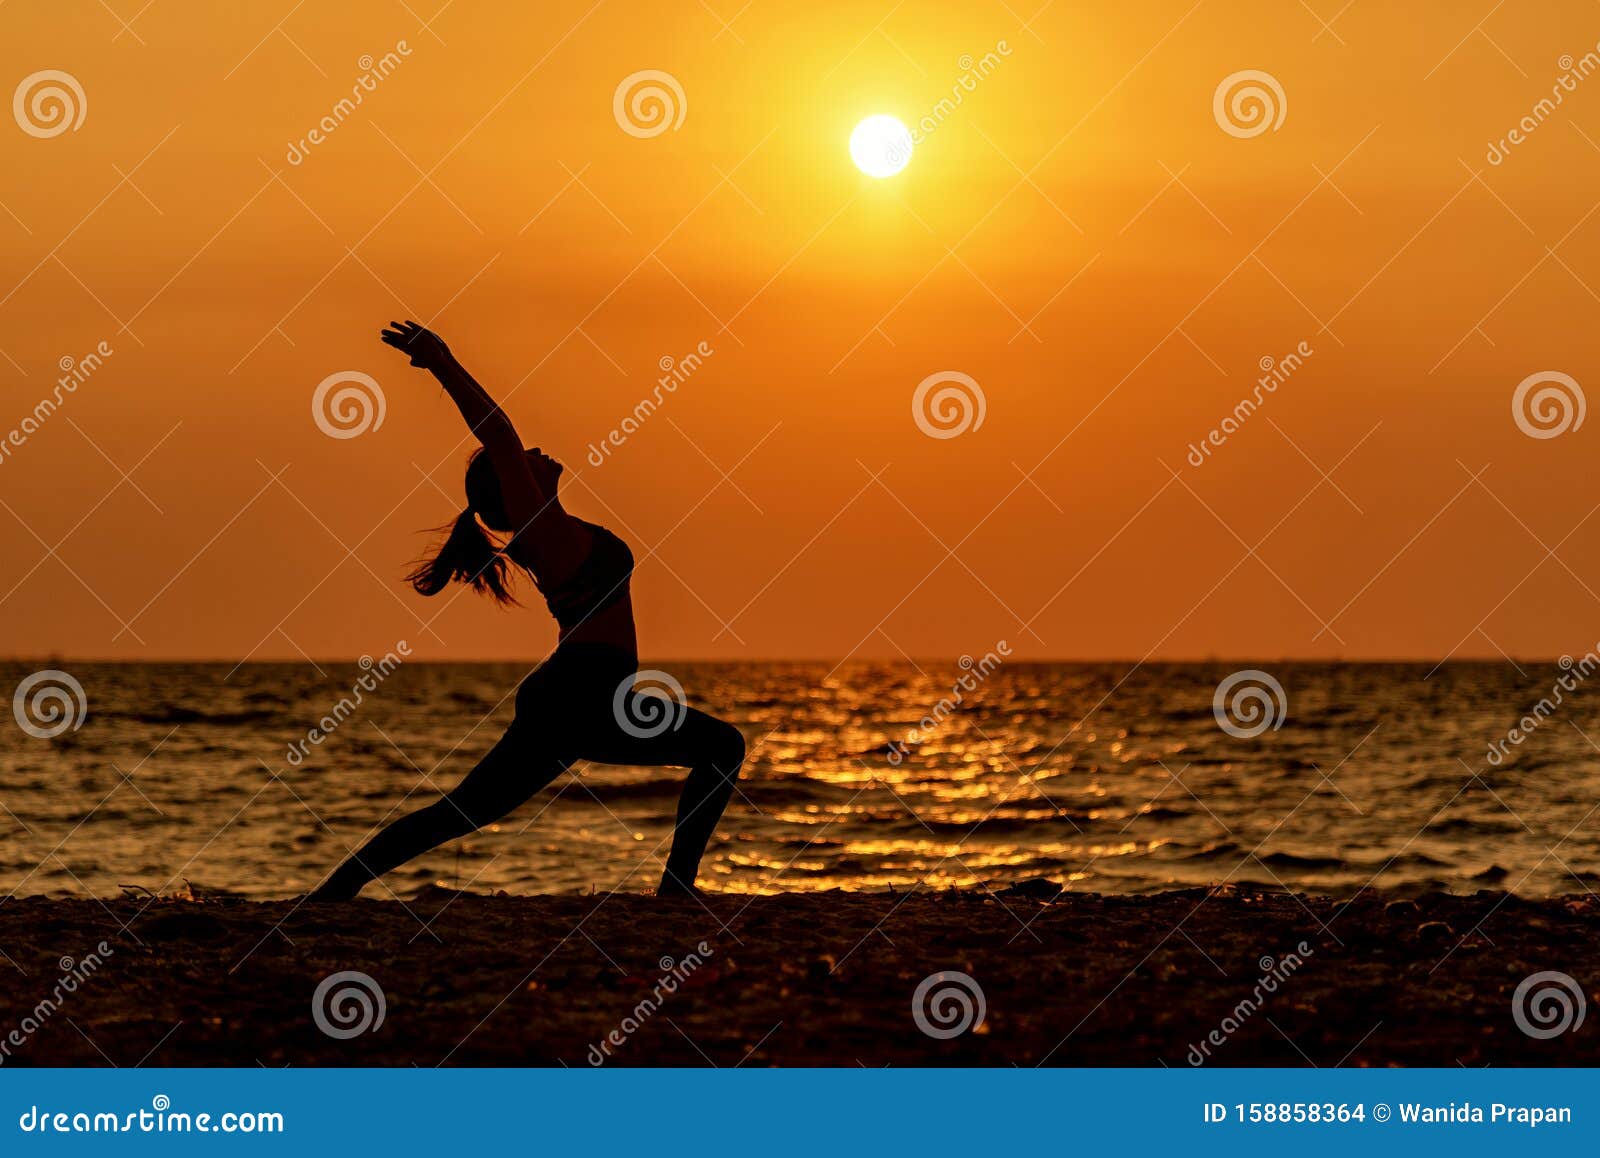 balance meditation yoga spirit life mind woman peace vitality,